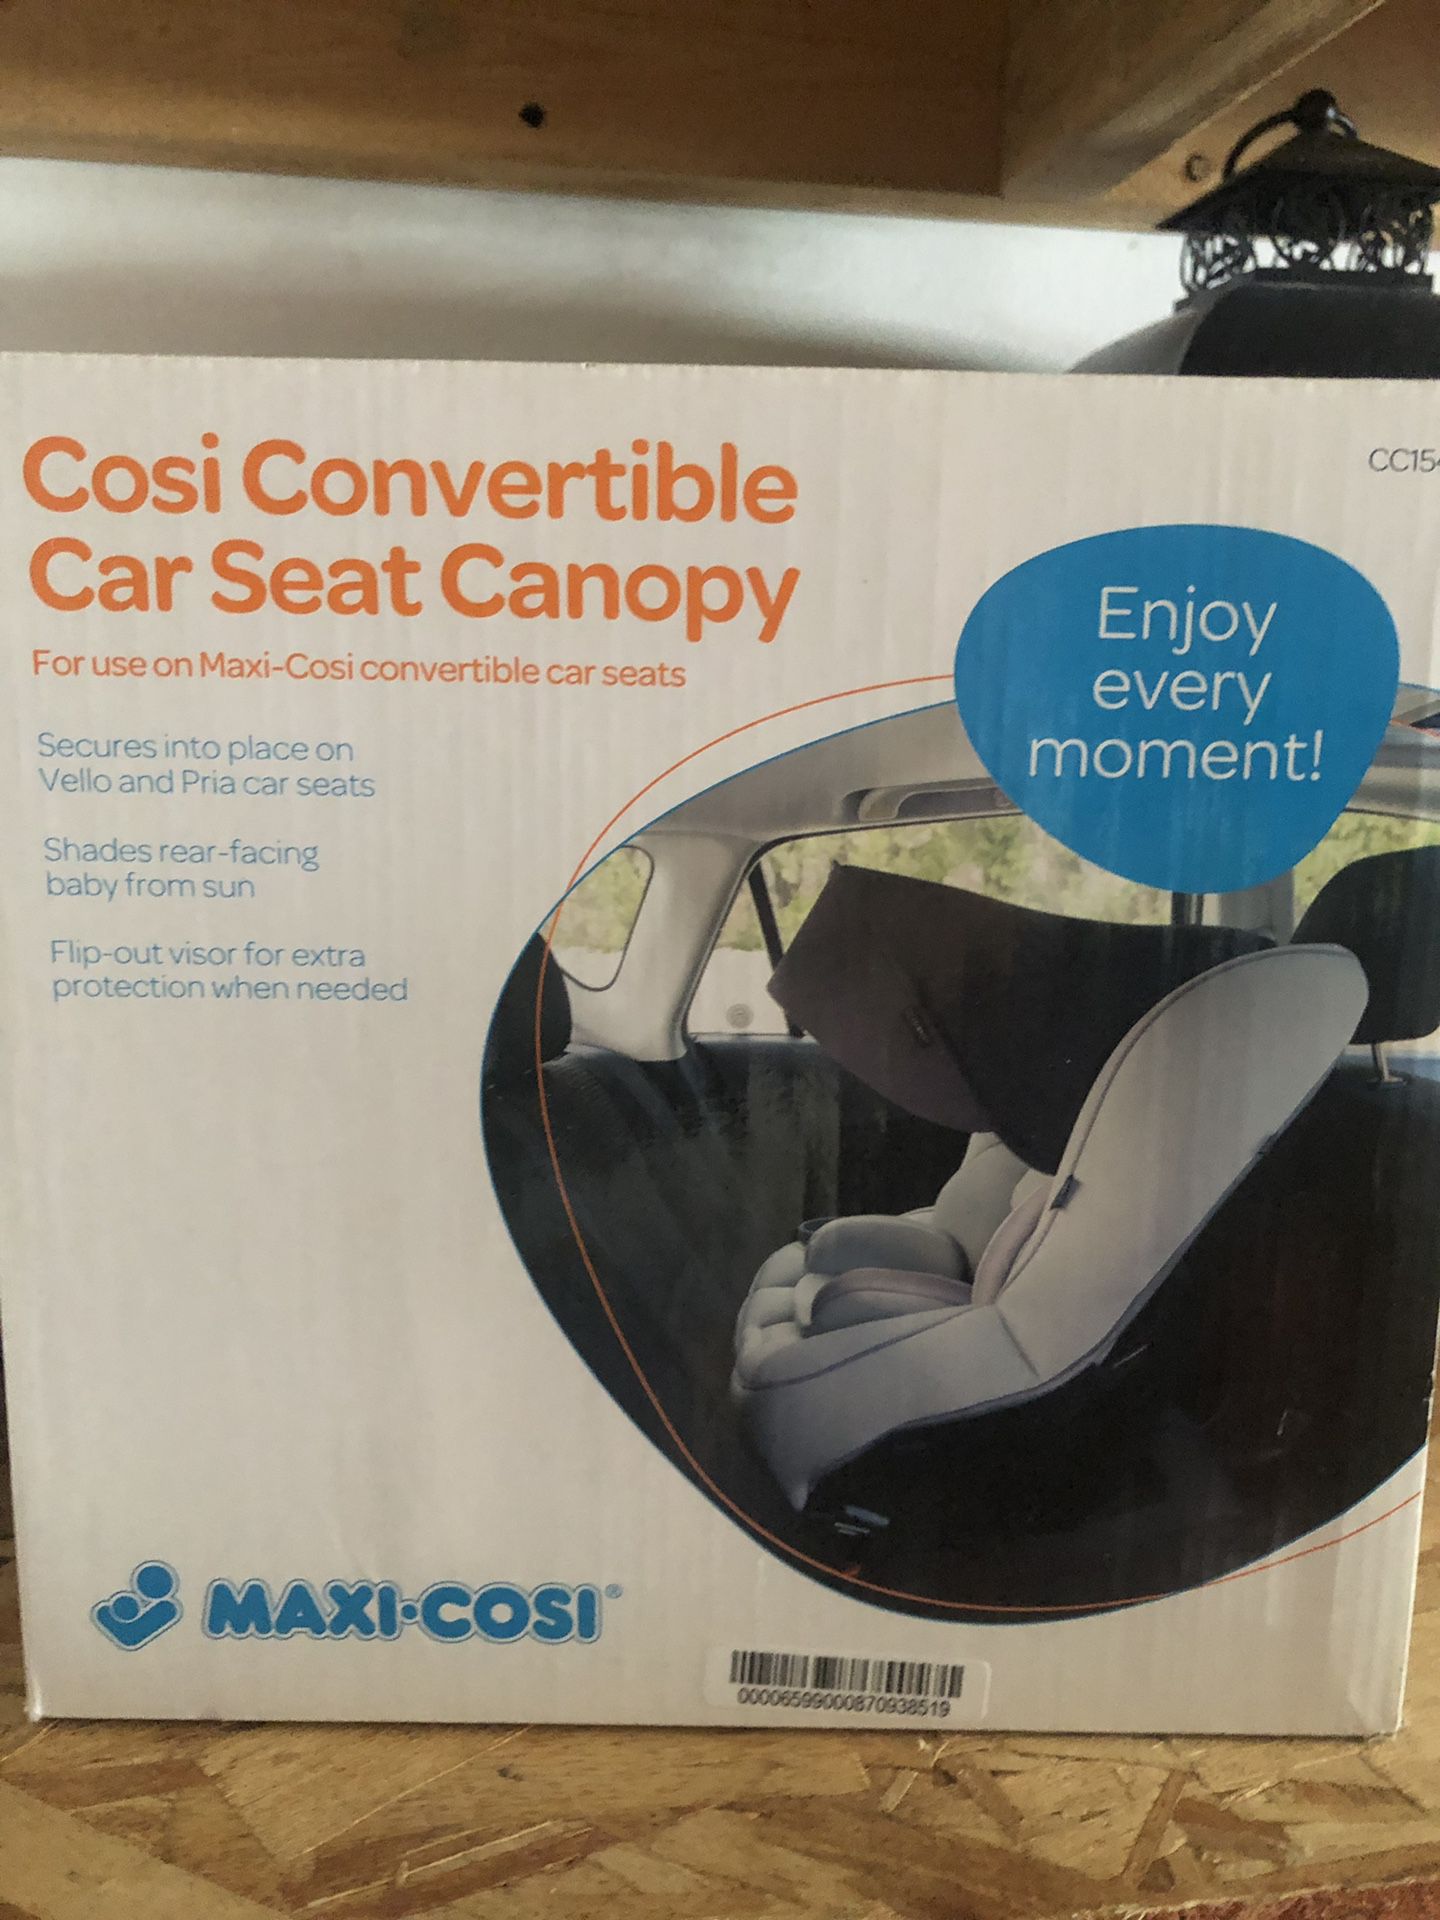 Maxi Cosi convertible car seat Canopy